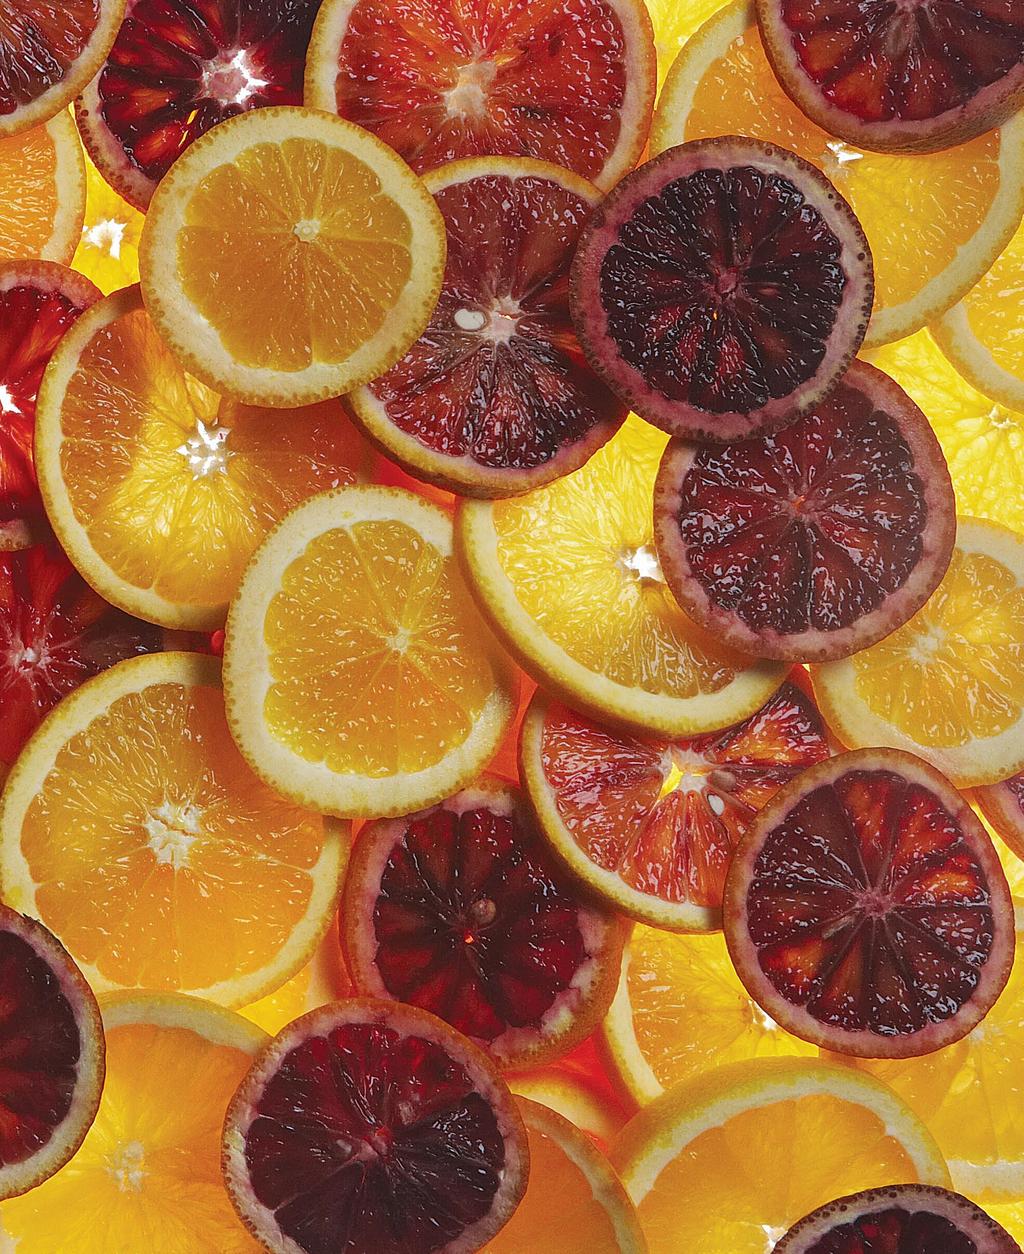 Oranges A supermarket staple? Sure. Delicious year-round? Not even close.